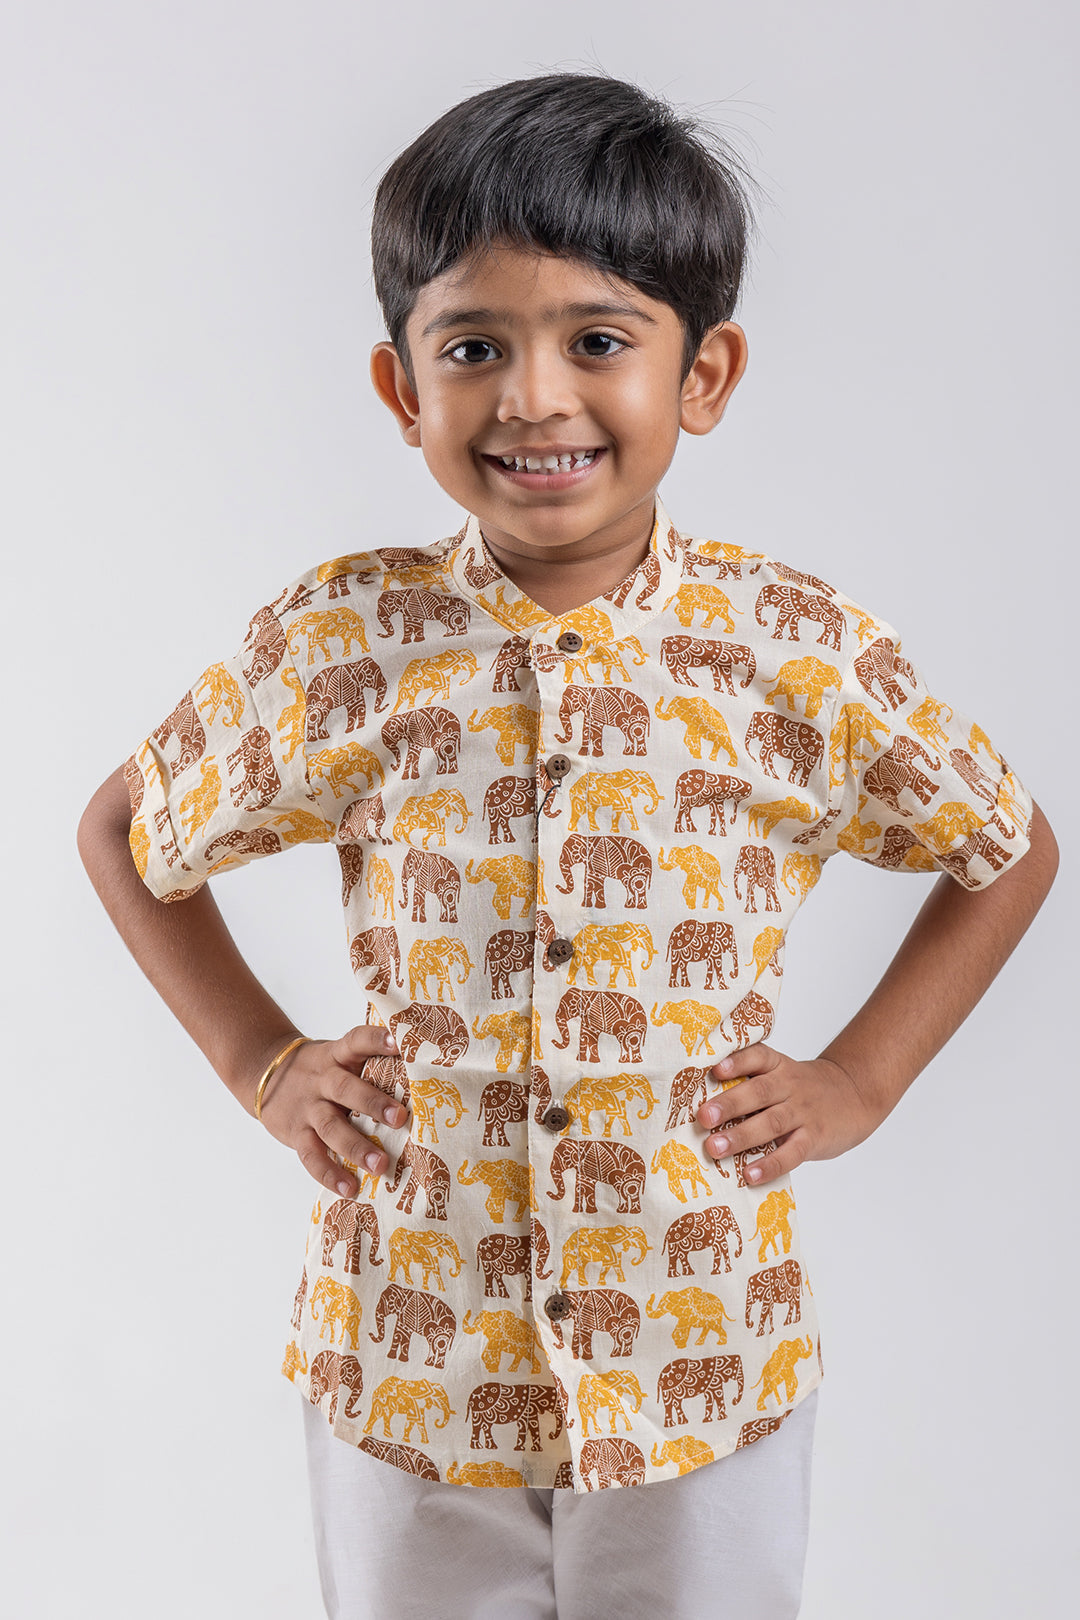 Cute Elephant Print Shirt for Boys